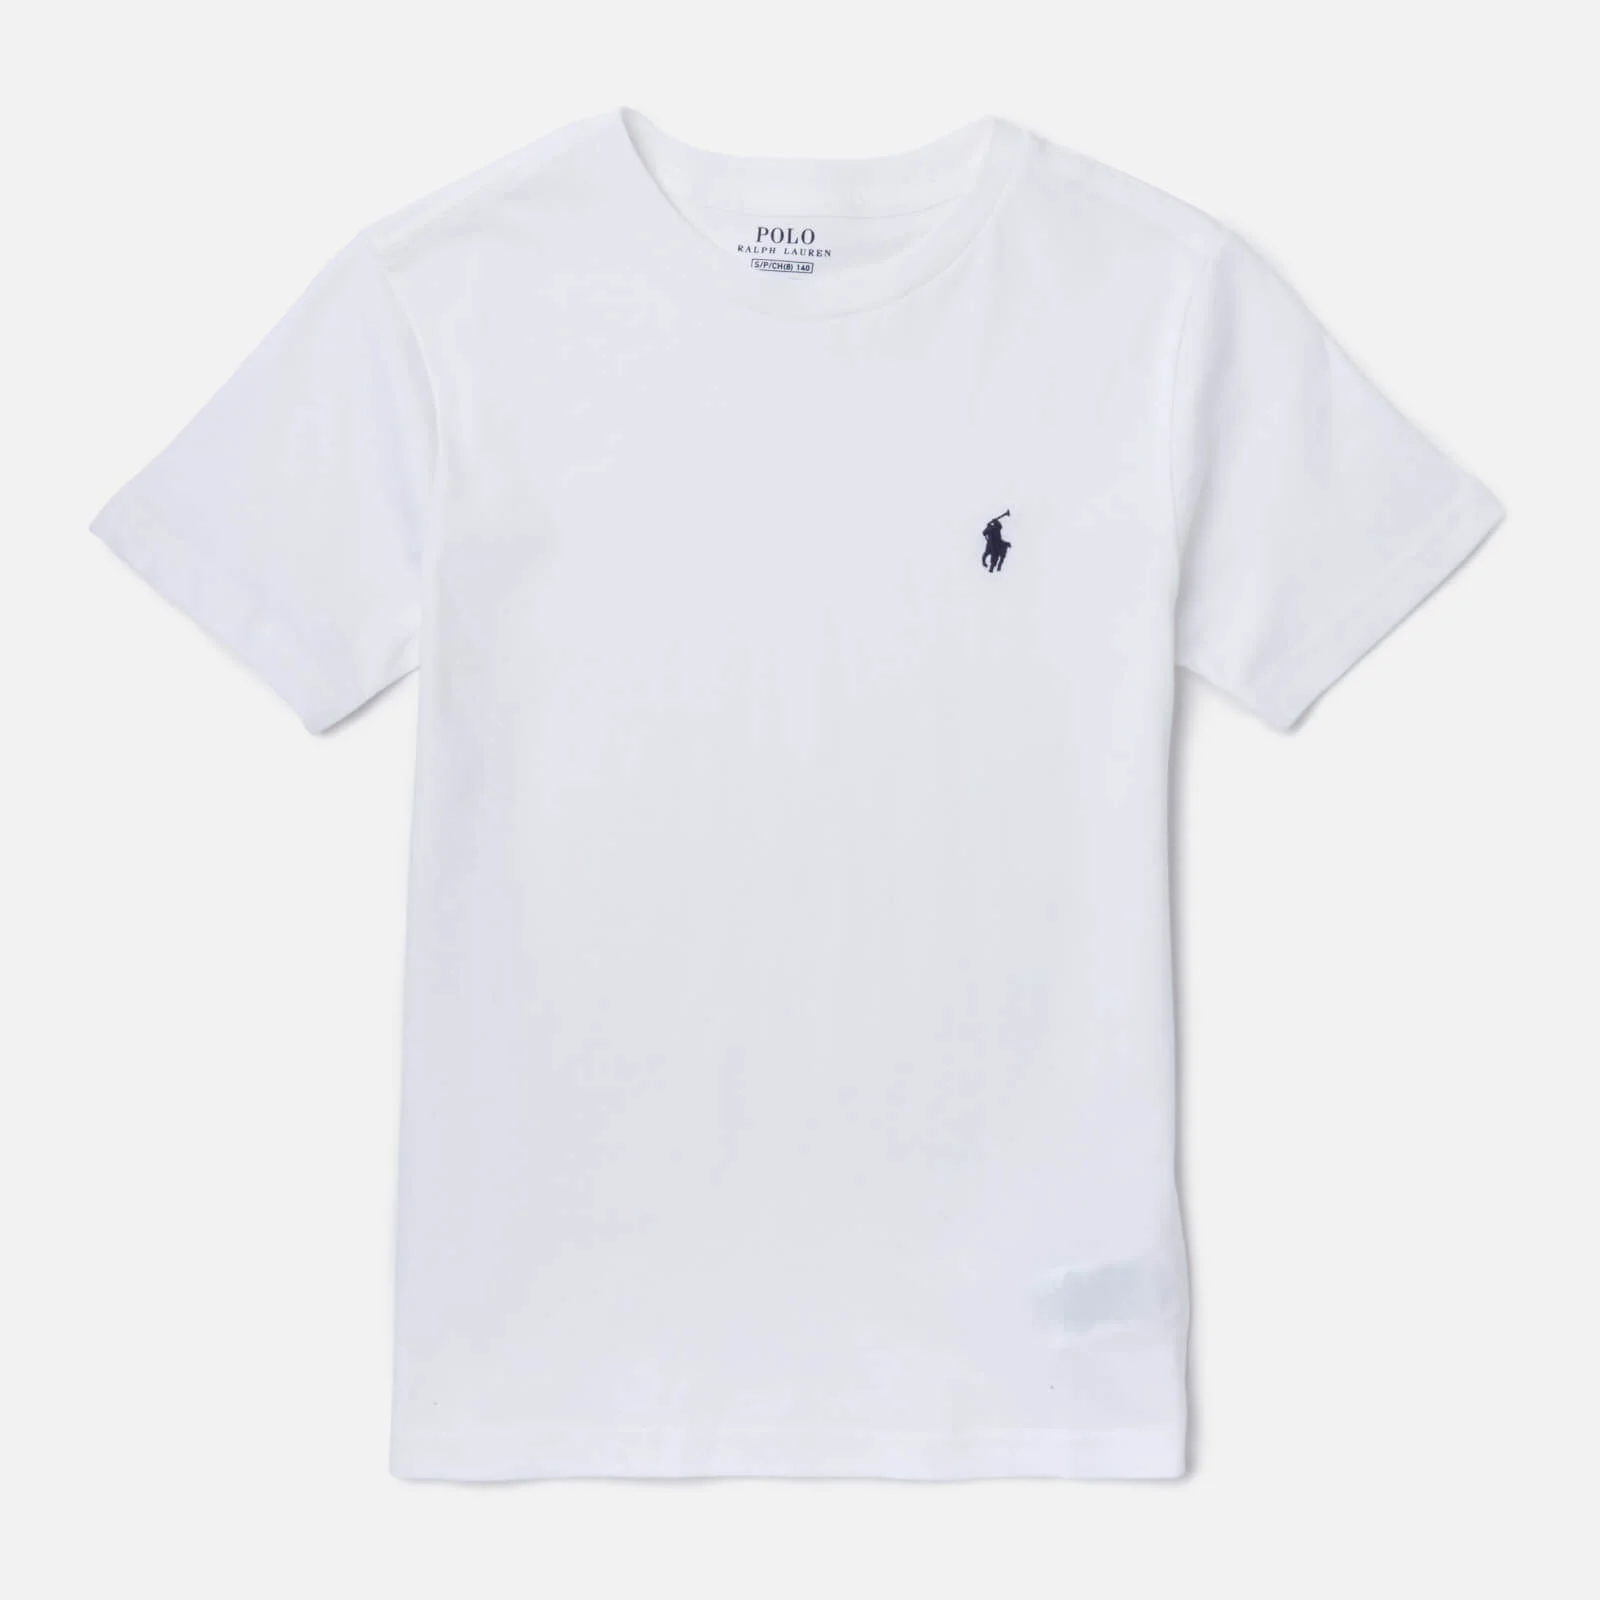 Polo Ralph Lauren Boys' Crew Neck T-Shirt - White Image 1